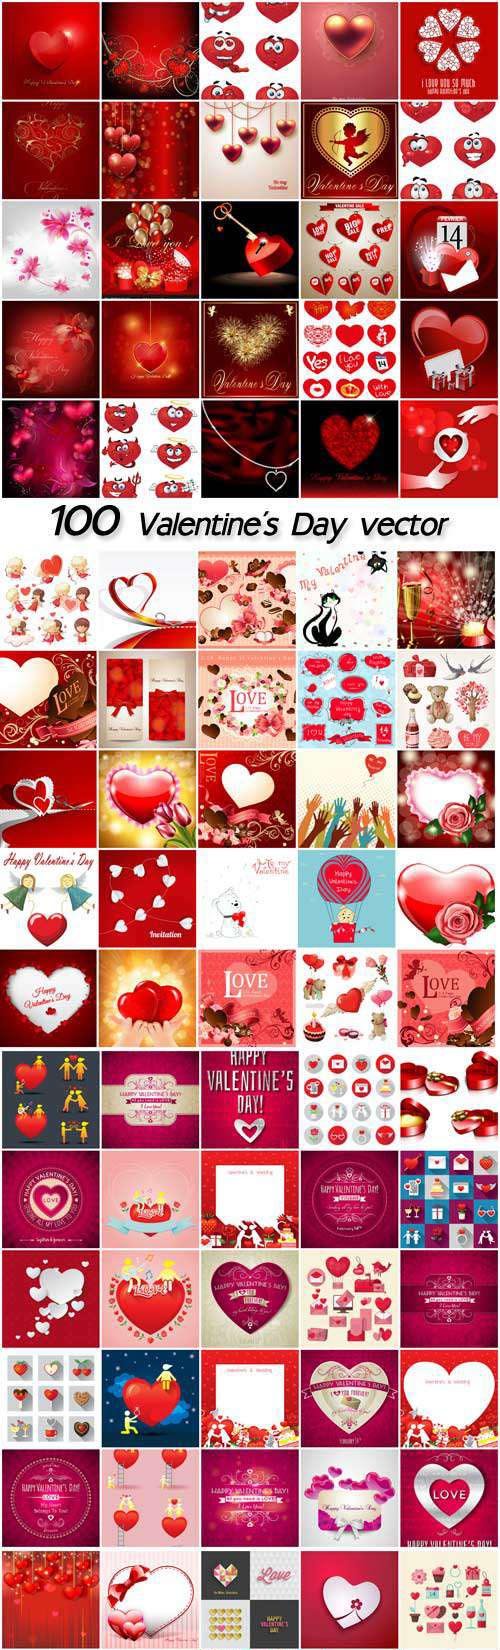 Valentine's Day, romantic background, hearts